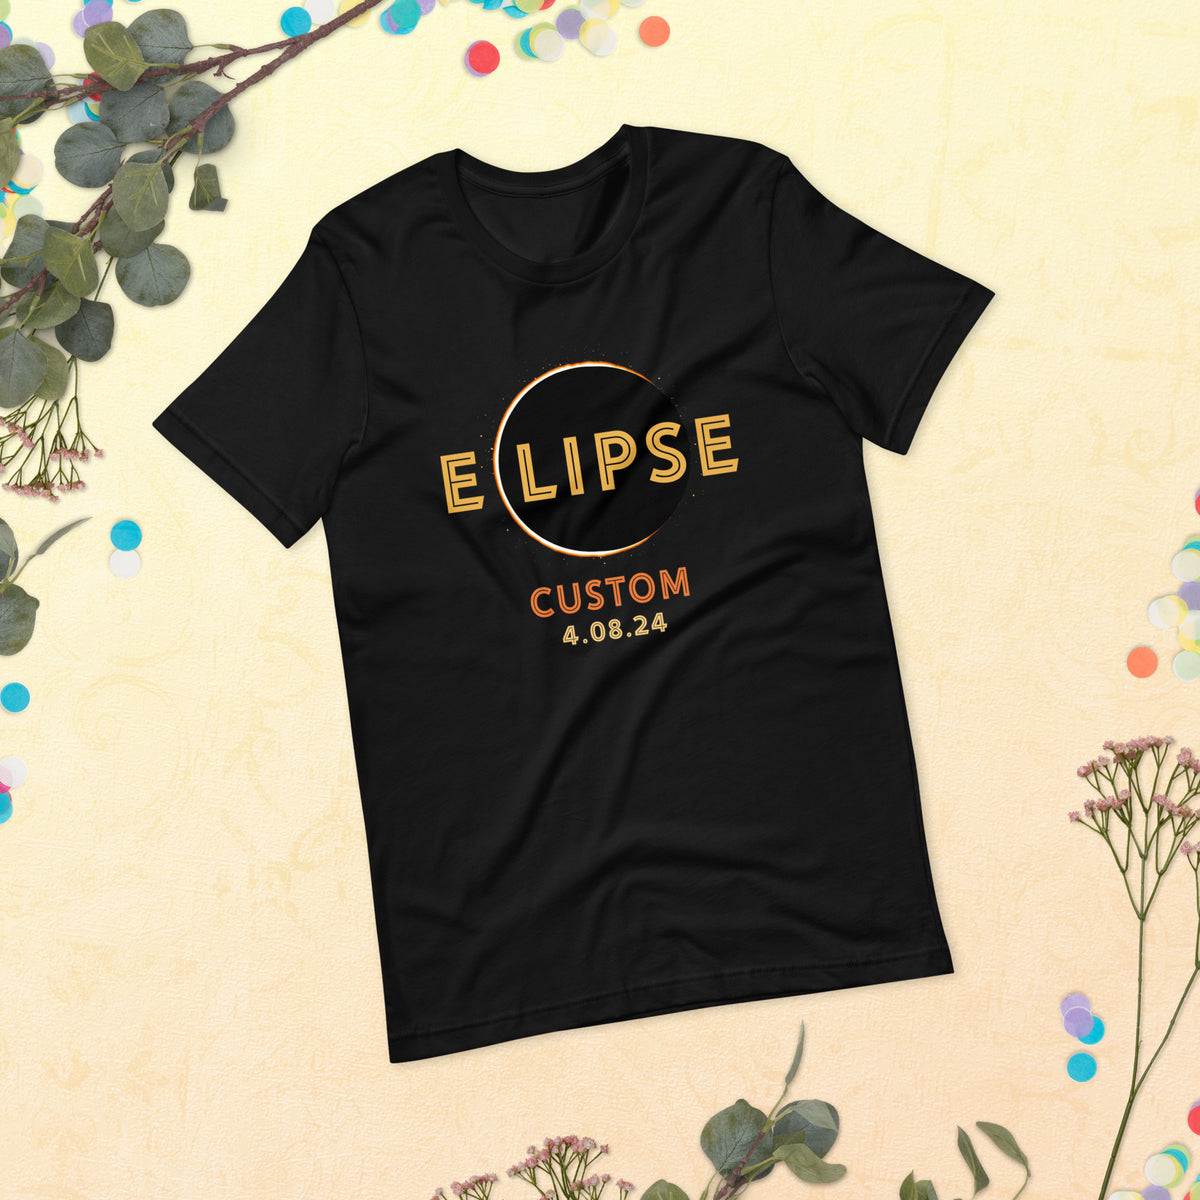 Solar Eclipse 2024 Shirt - Custom State - Sun Moon Totality